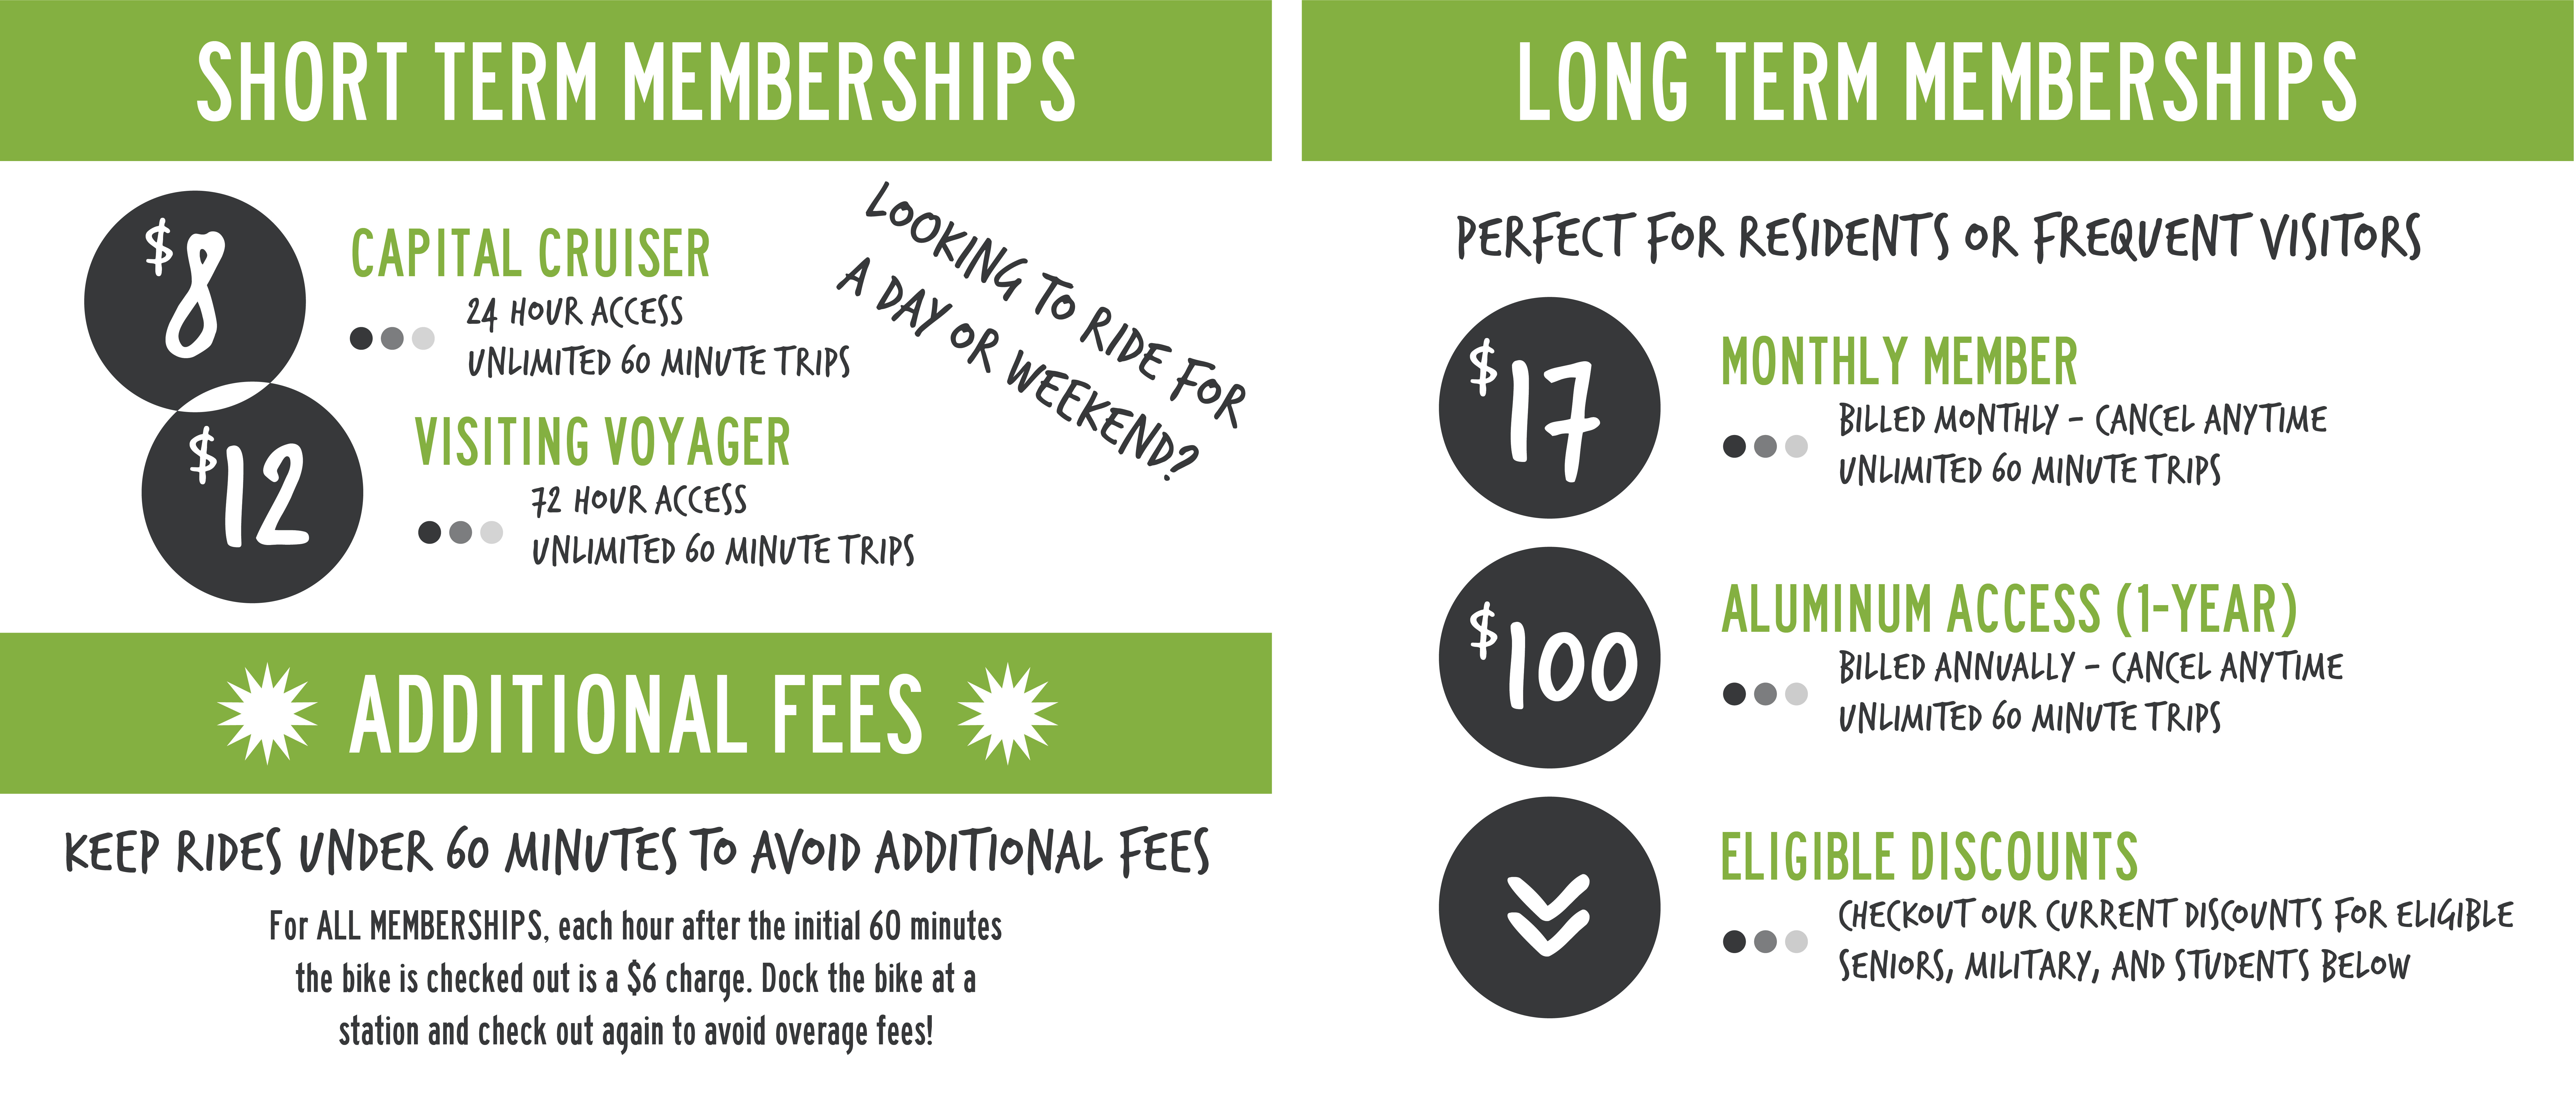 Membership information for short term membership passes and long term memberships.